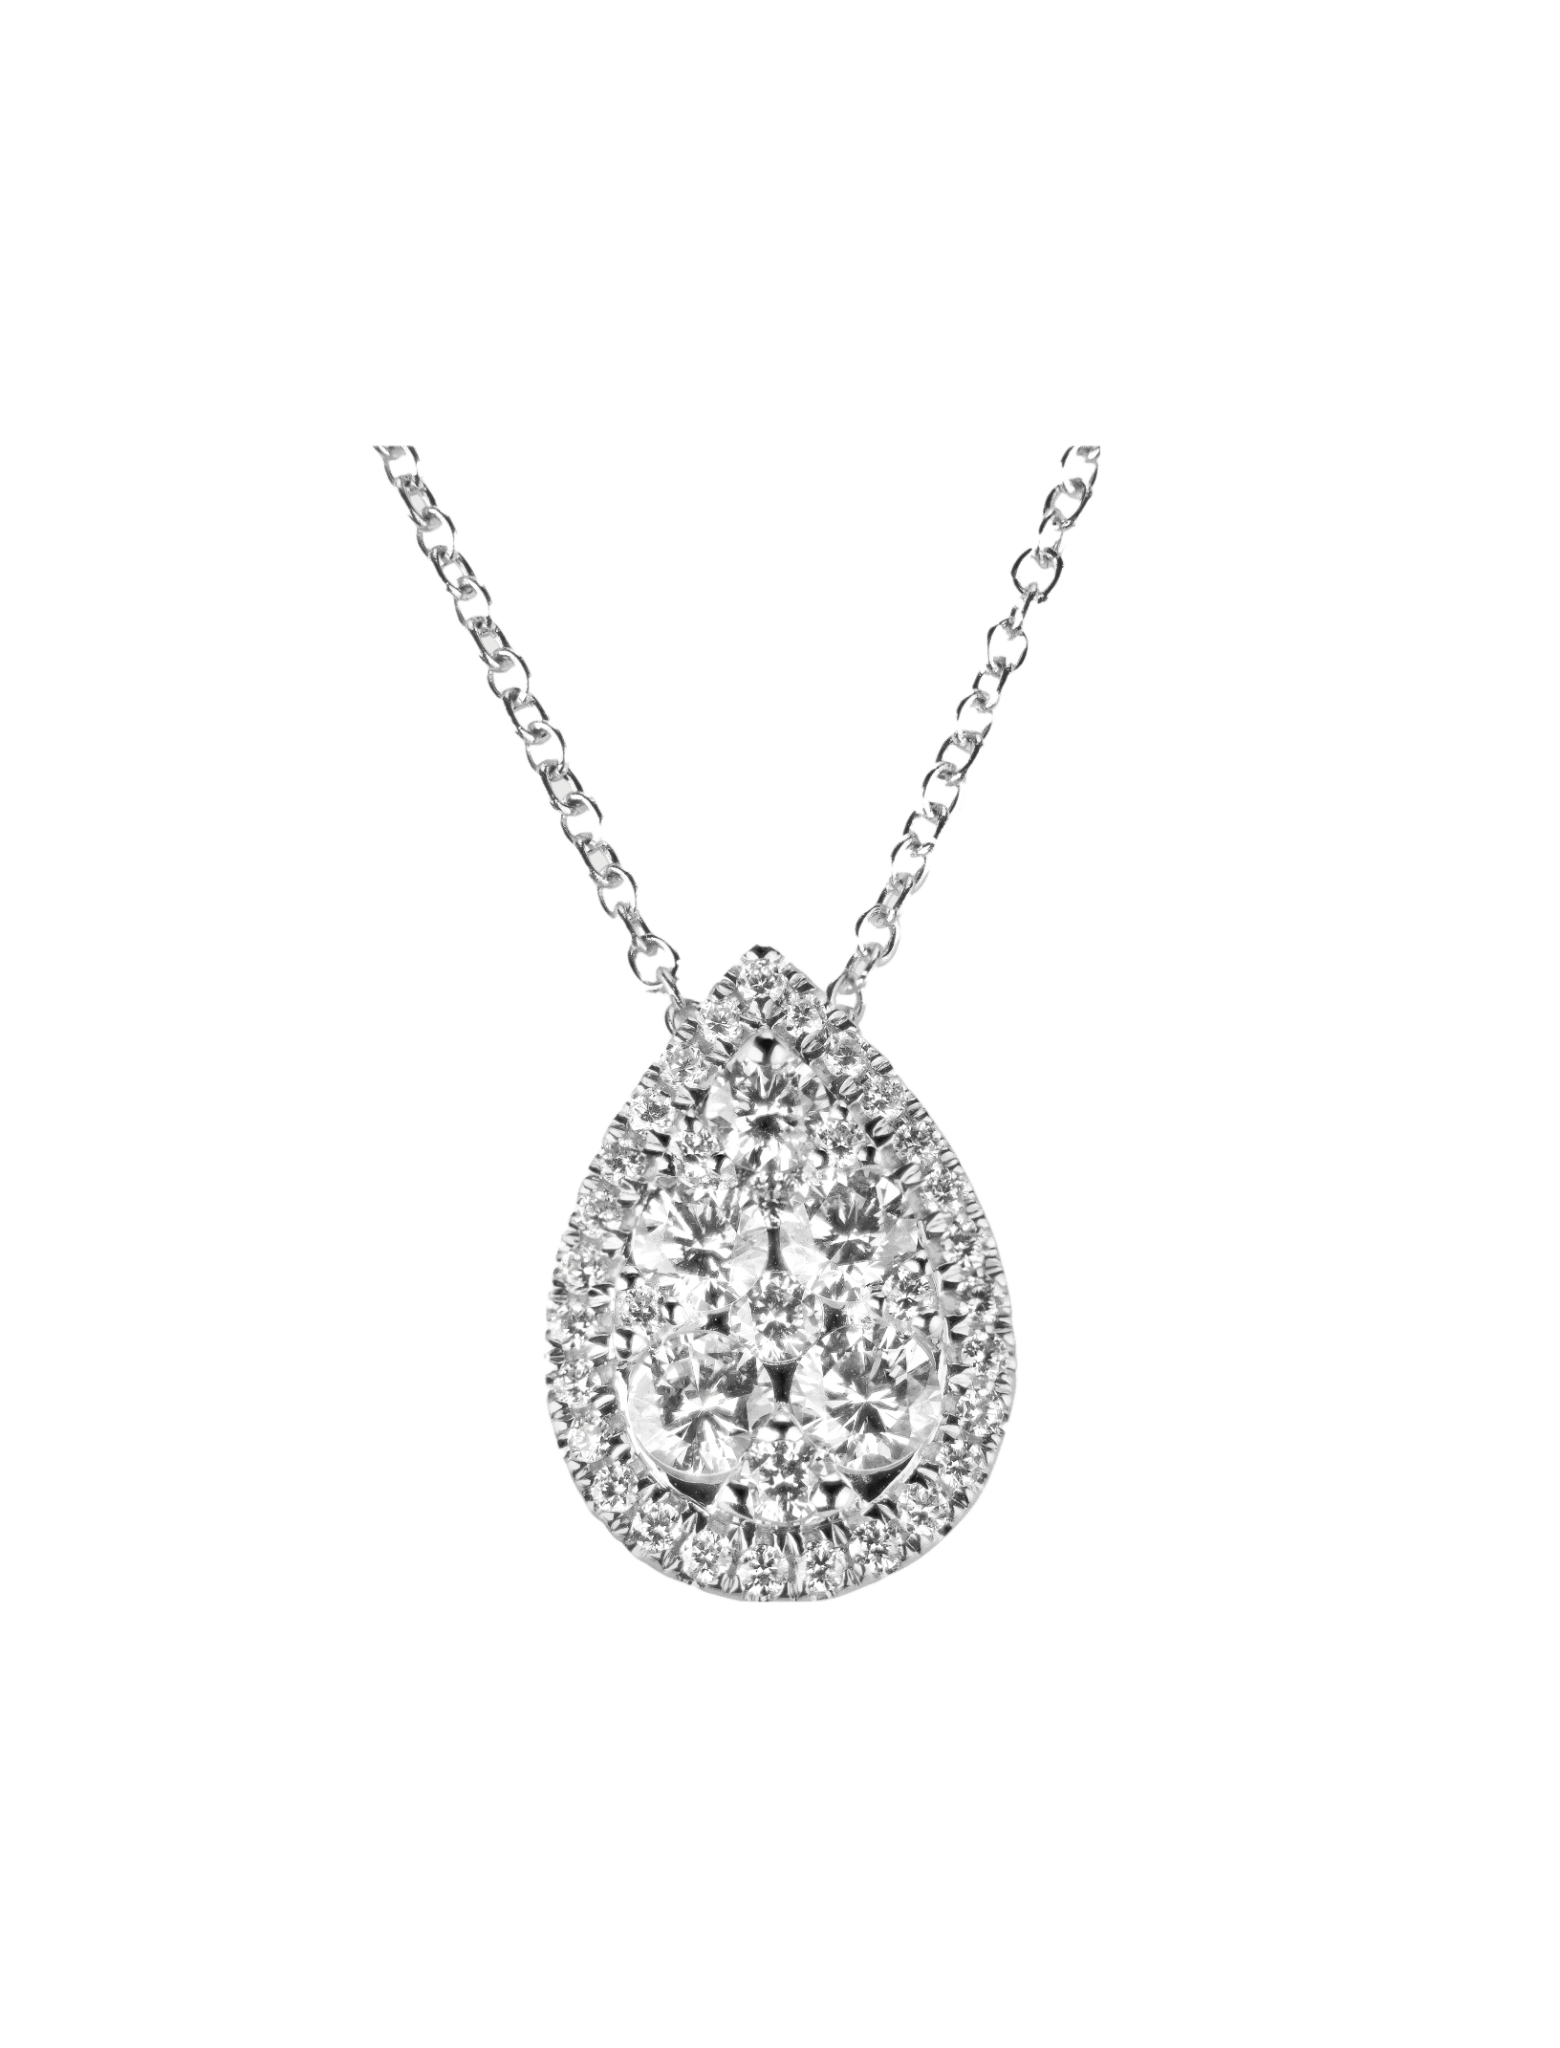 Pre-Loved Jewelry Tiffany Peretti DBY Fancy Yellow Pear Shaped Diamond  Pendant FLAWLESS $9k NEW 5222 - Blue Chip Jewelry